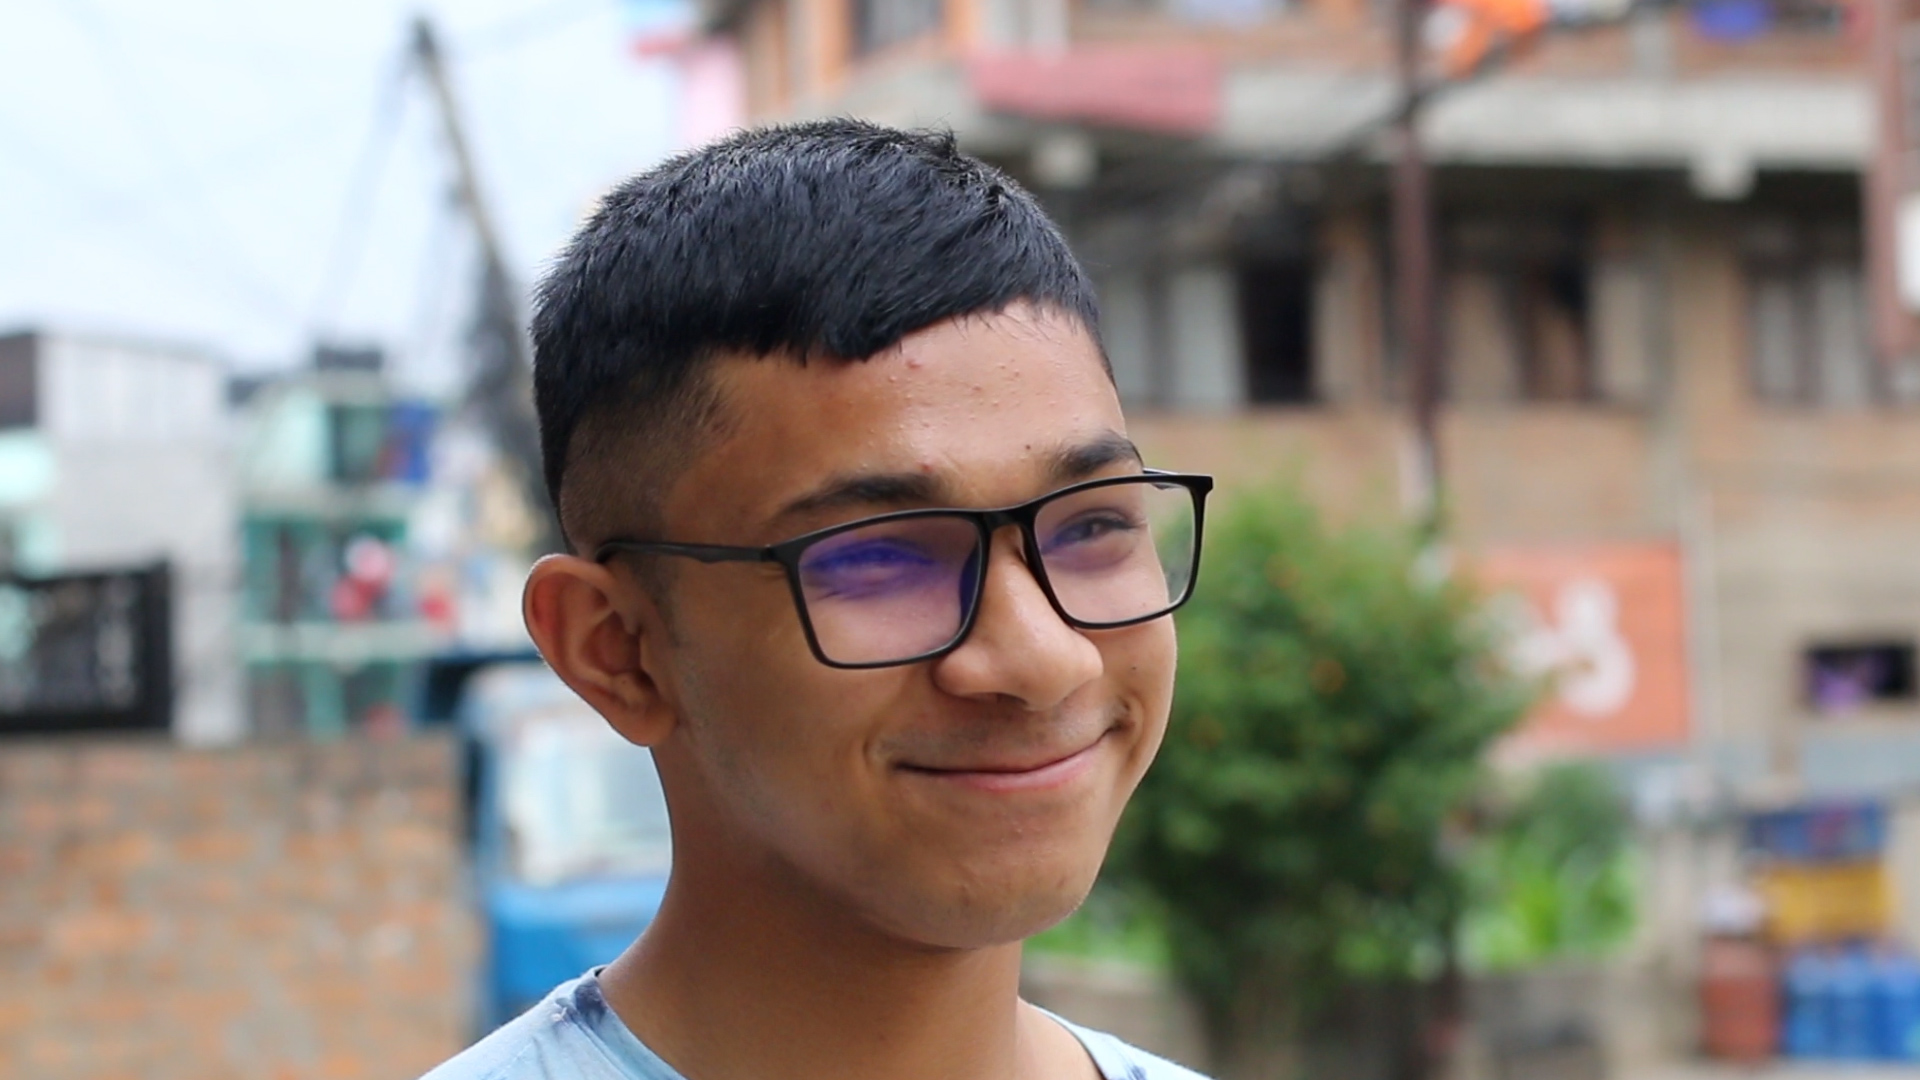 Nepali boy